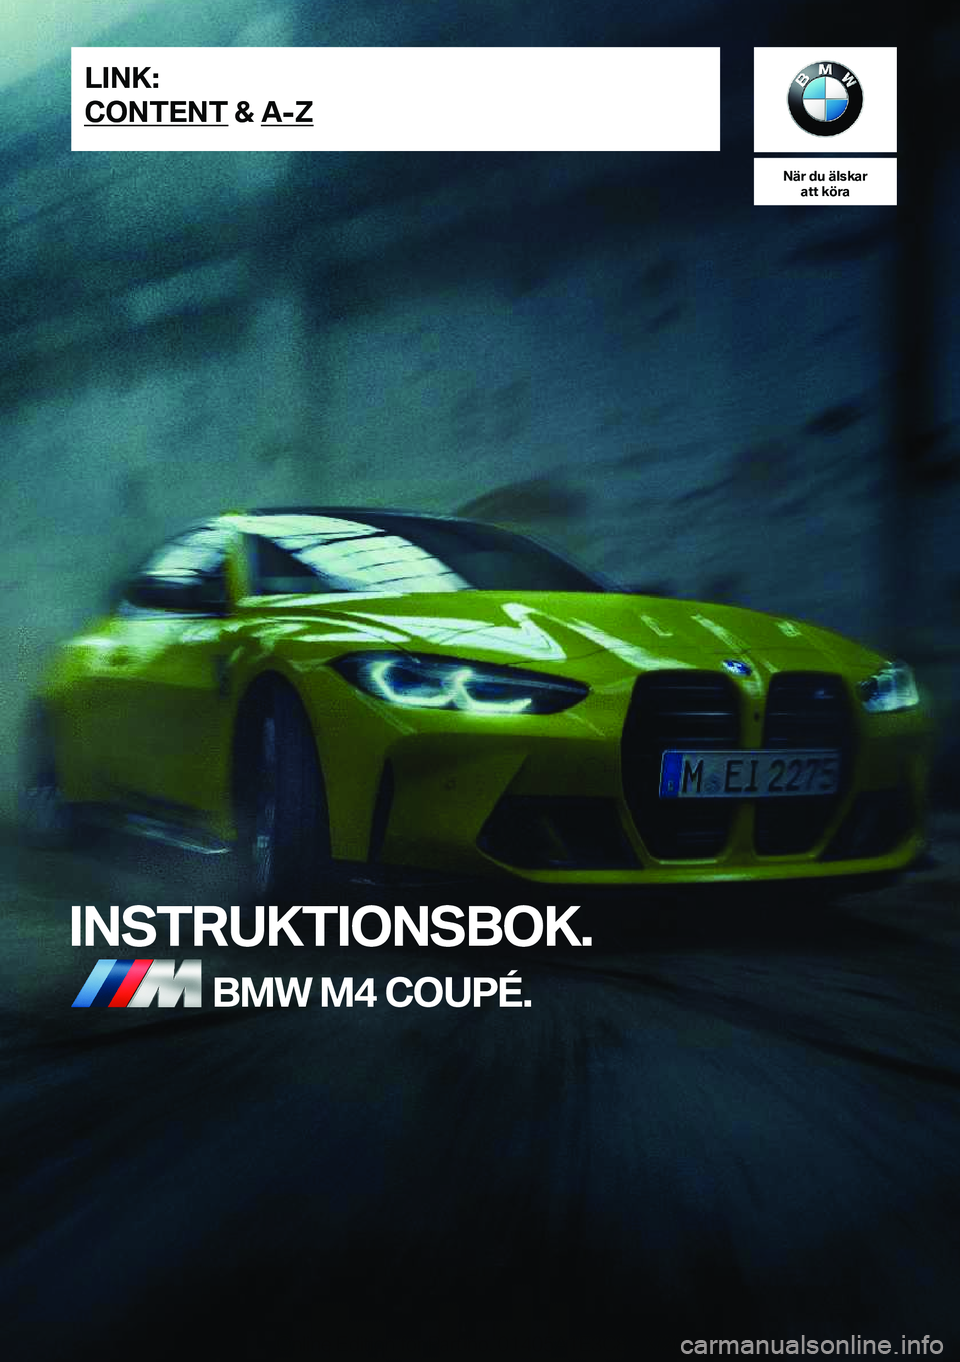 BMW M4 2021  InstruktionsbÖcker (in Swedish) �N�ä�r��d�u��ä�l�s�k�a�r�a�t�t��k�